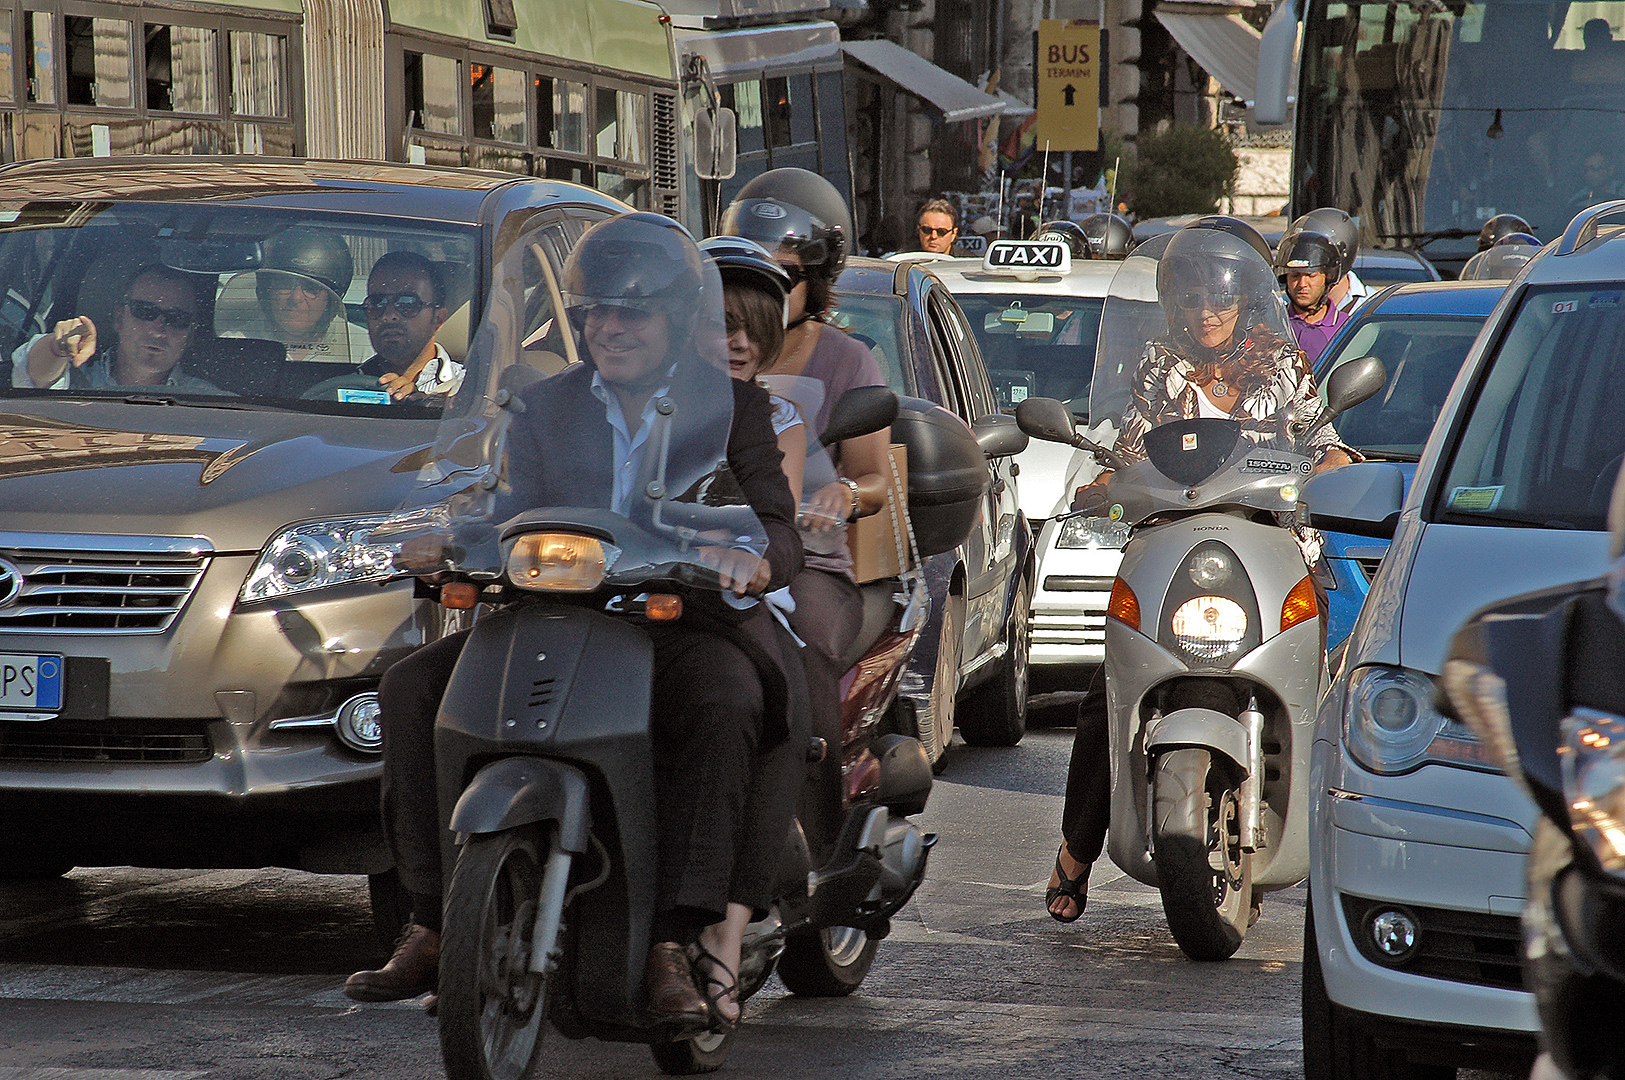 Corso Vittorio Emanuele II, Rome; Corso Vittorio Emanuele II, Rome